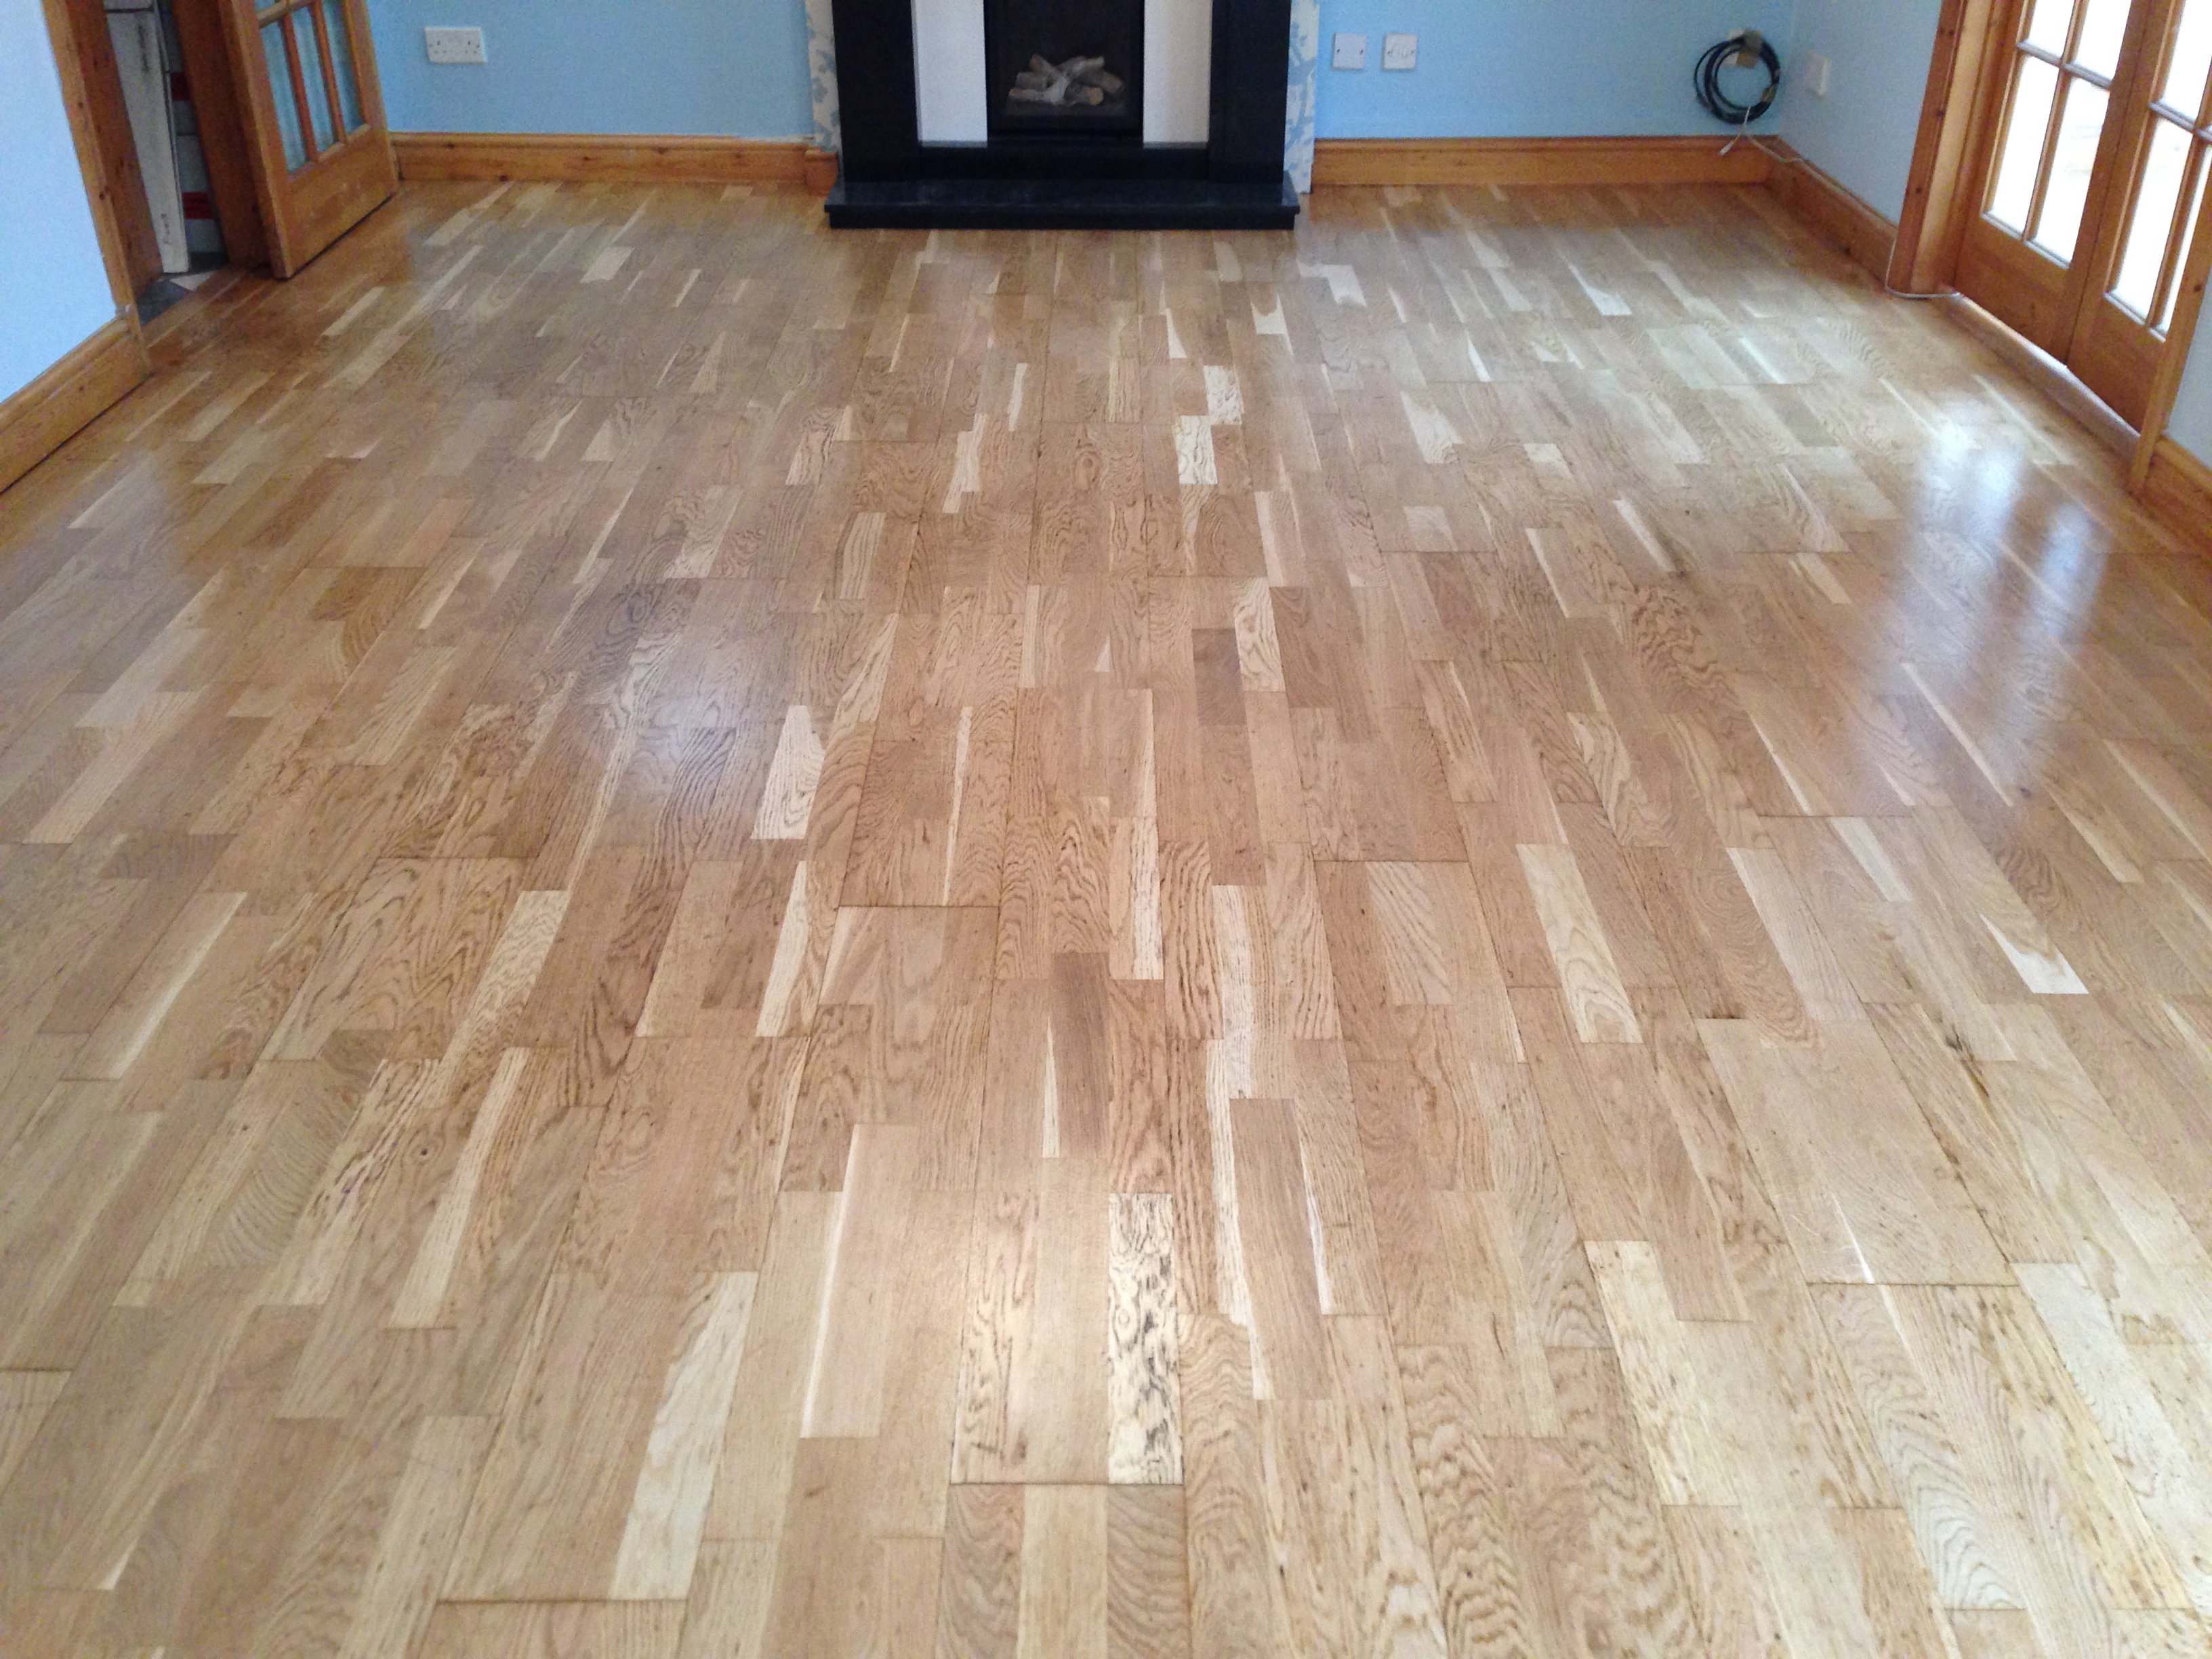 Laminate Wood Floor Restoration The, Can I Sand Laminate Flooring